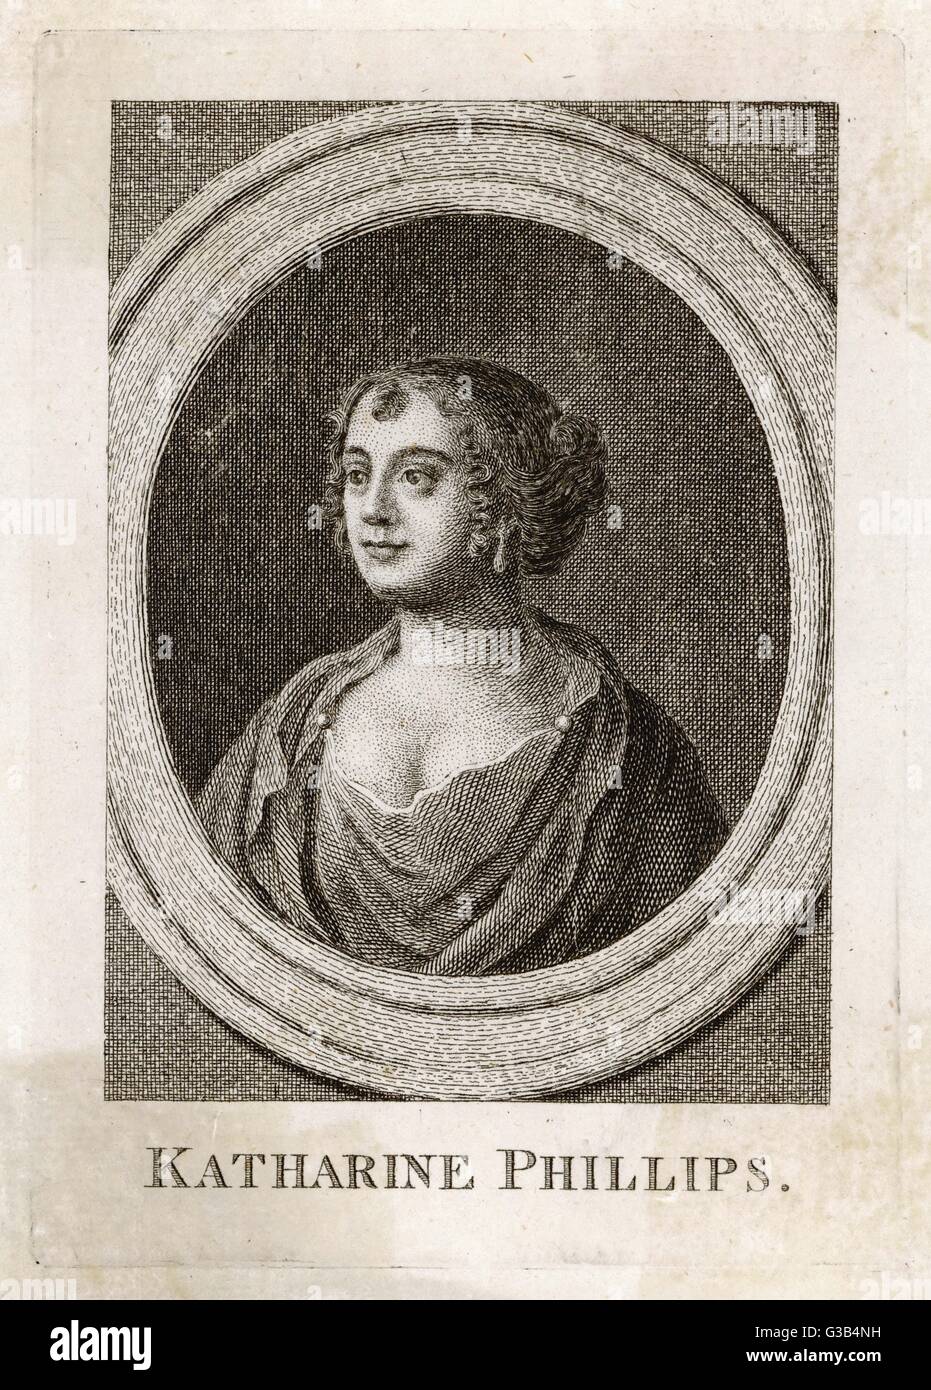 KATHERINE PHILIPS aka "ORINDA' poeta inglese data: 1631 - 1664 Foto Stock